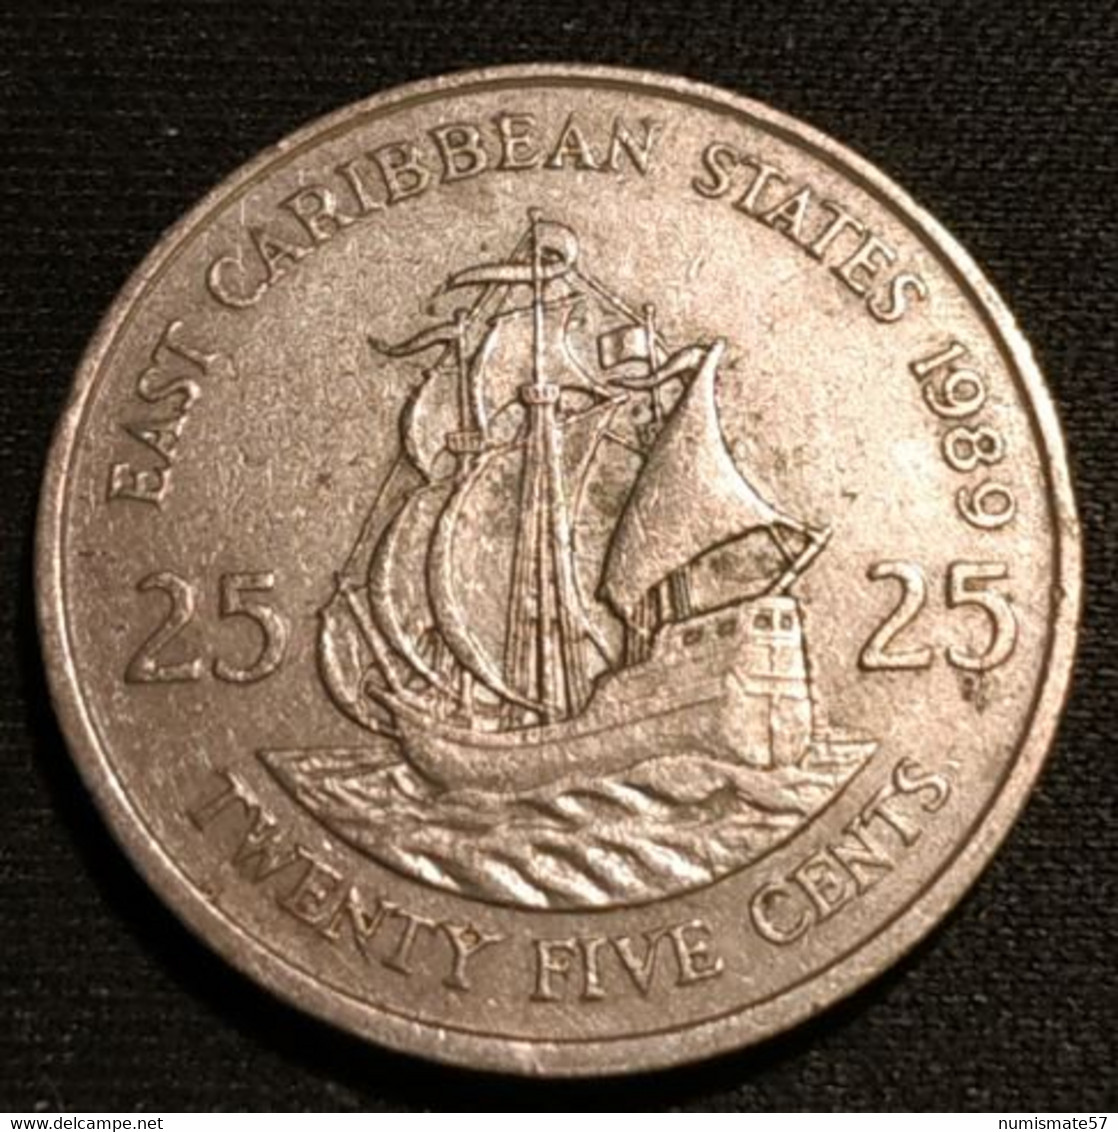 EAST CARIBBEAN STATES - 25 CENTS 1989 - Elizabeth II - 2e Effigie - KM 14 - East Caribbean States